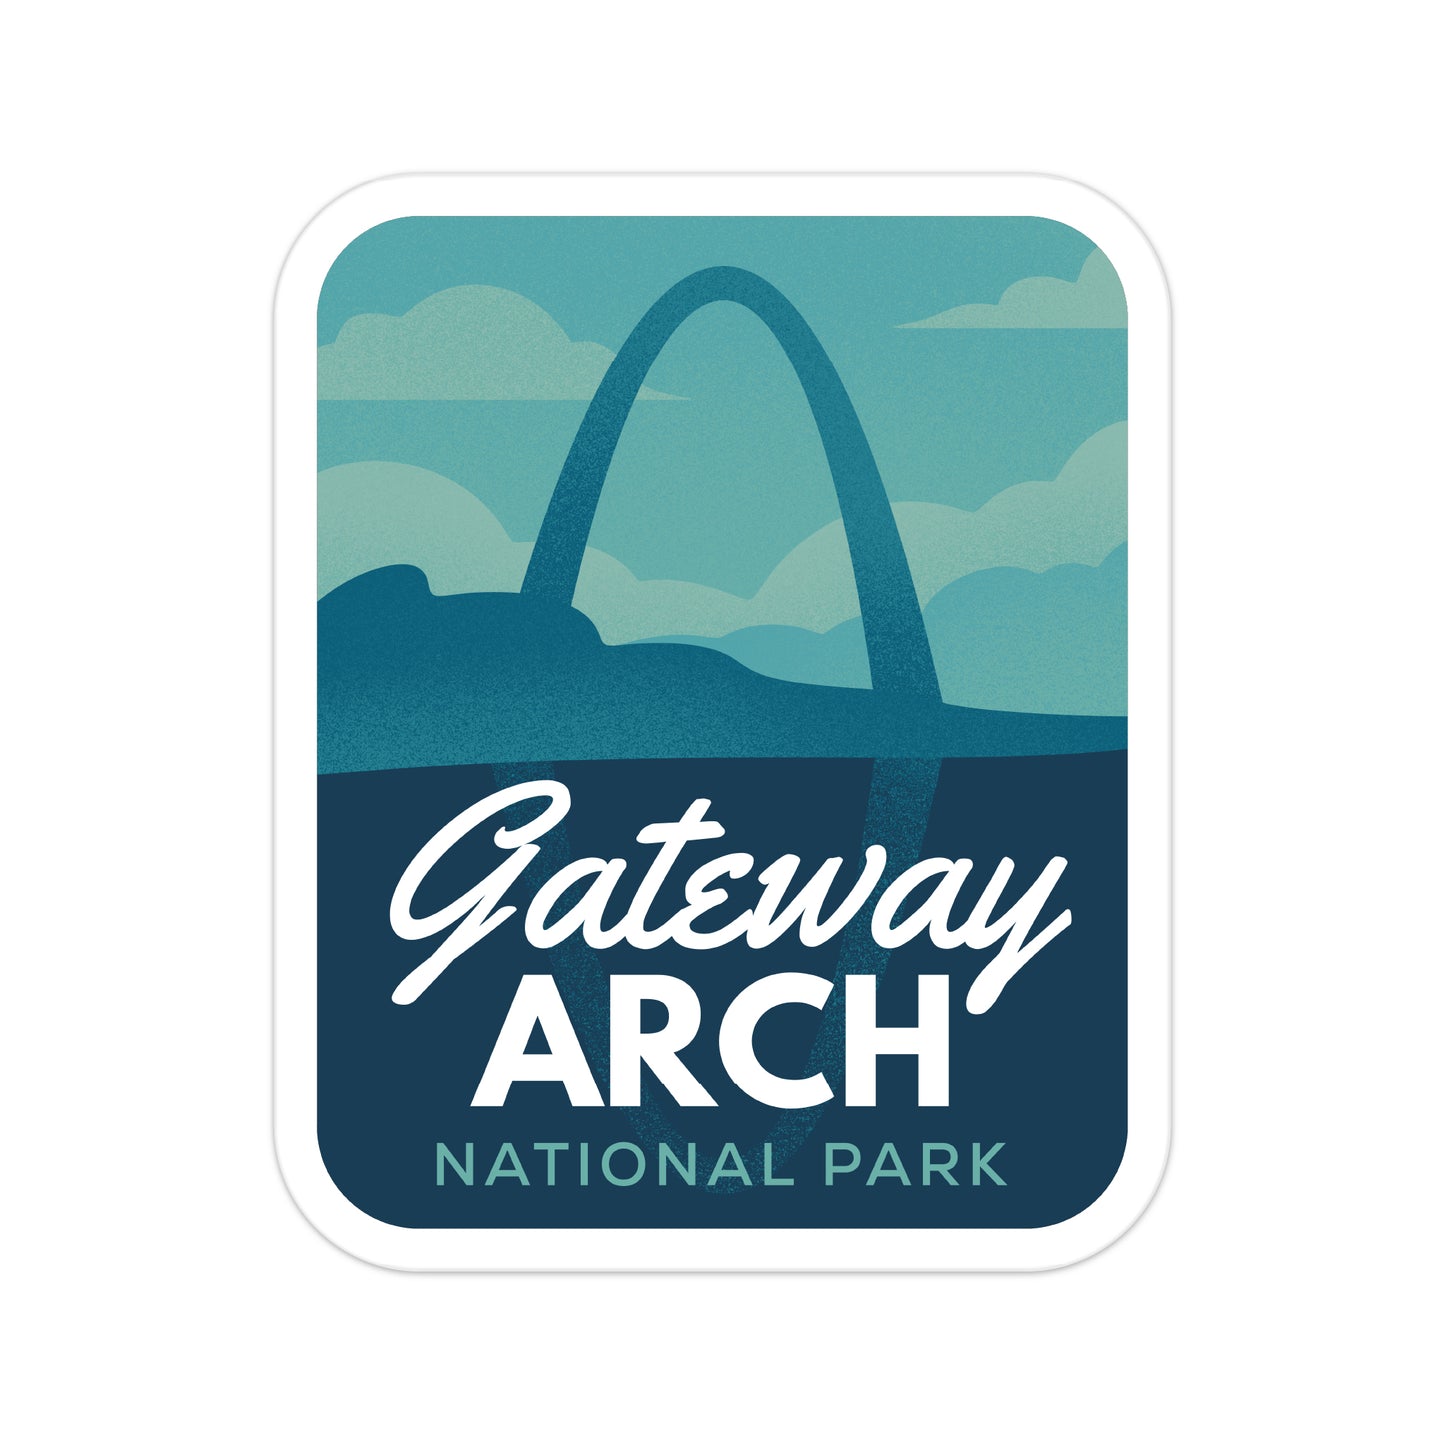 A sticker of Gateway Arch National Park